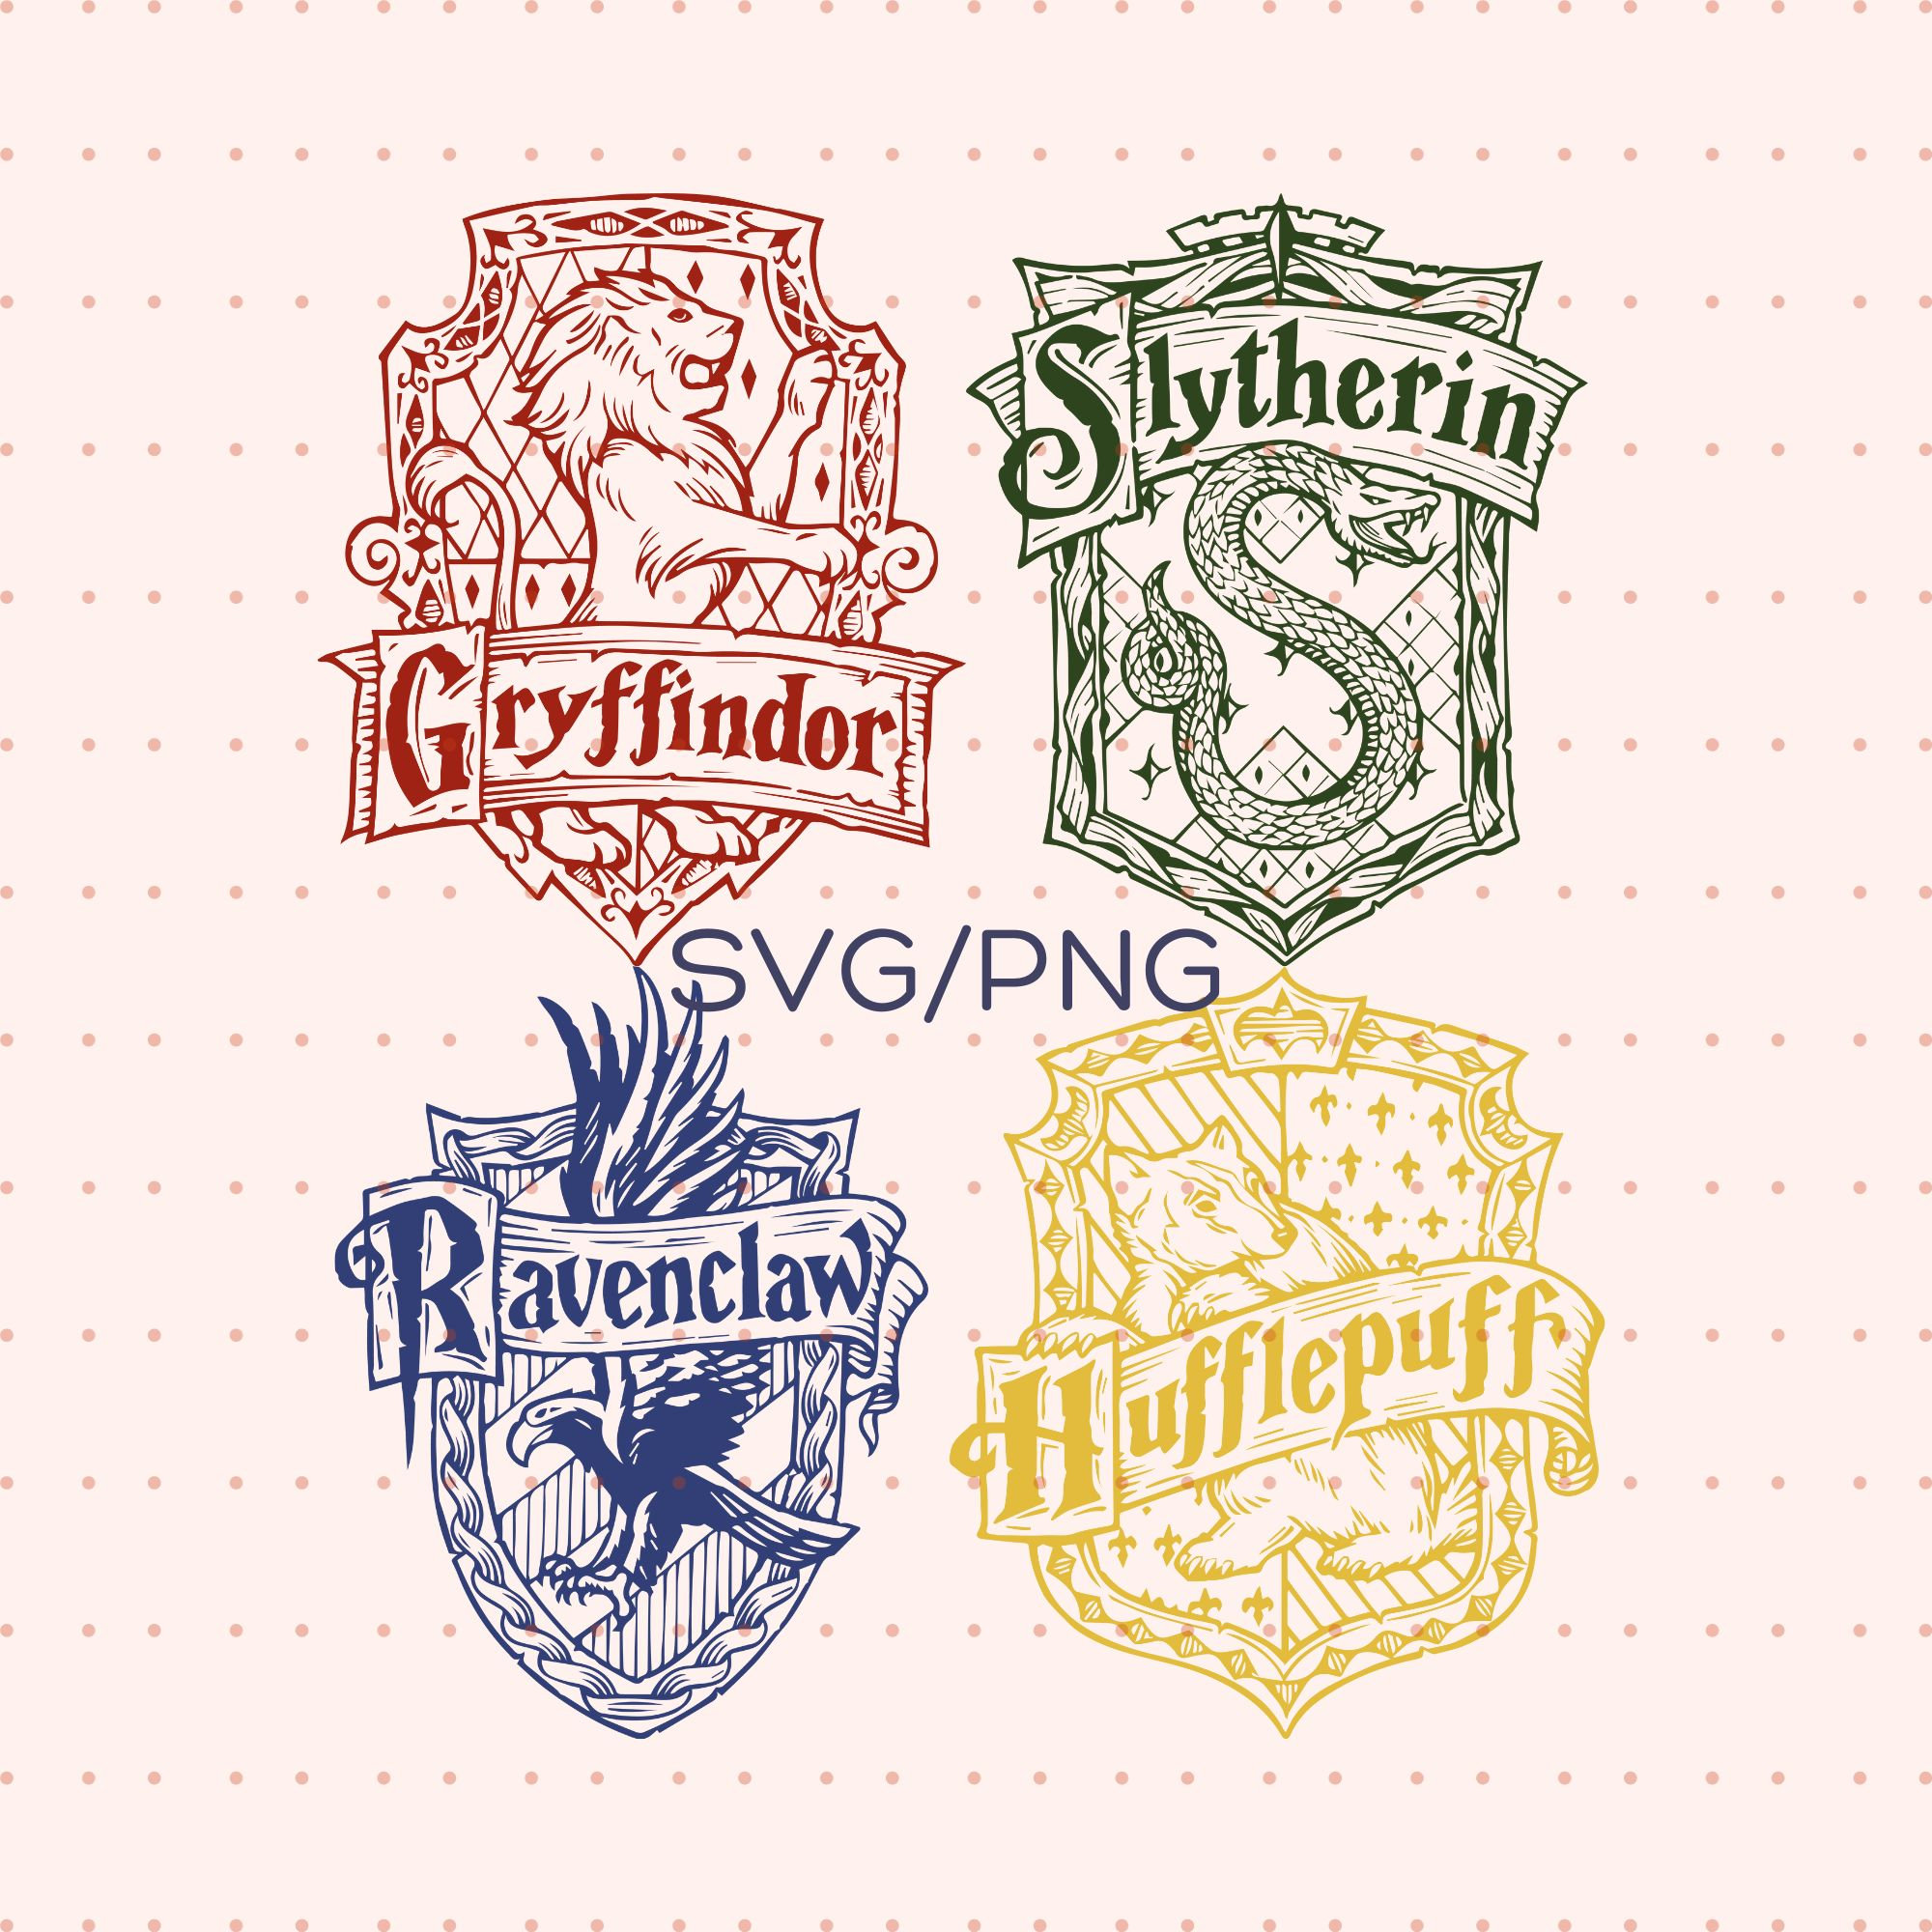 Ravenclaw Hogwarts House 2 SVG — KnotGrowingUp Designs